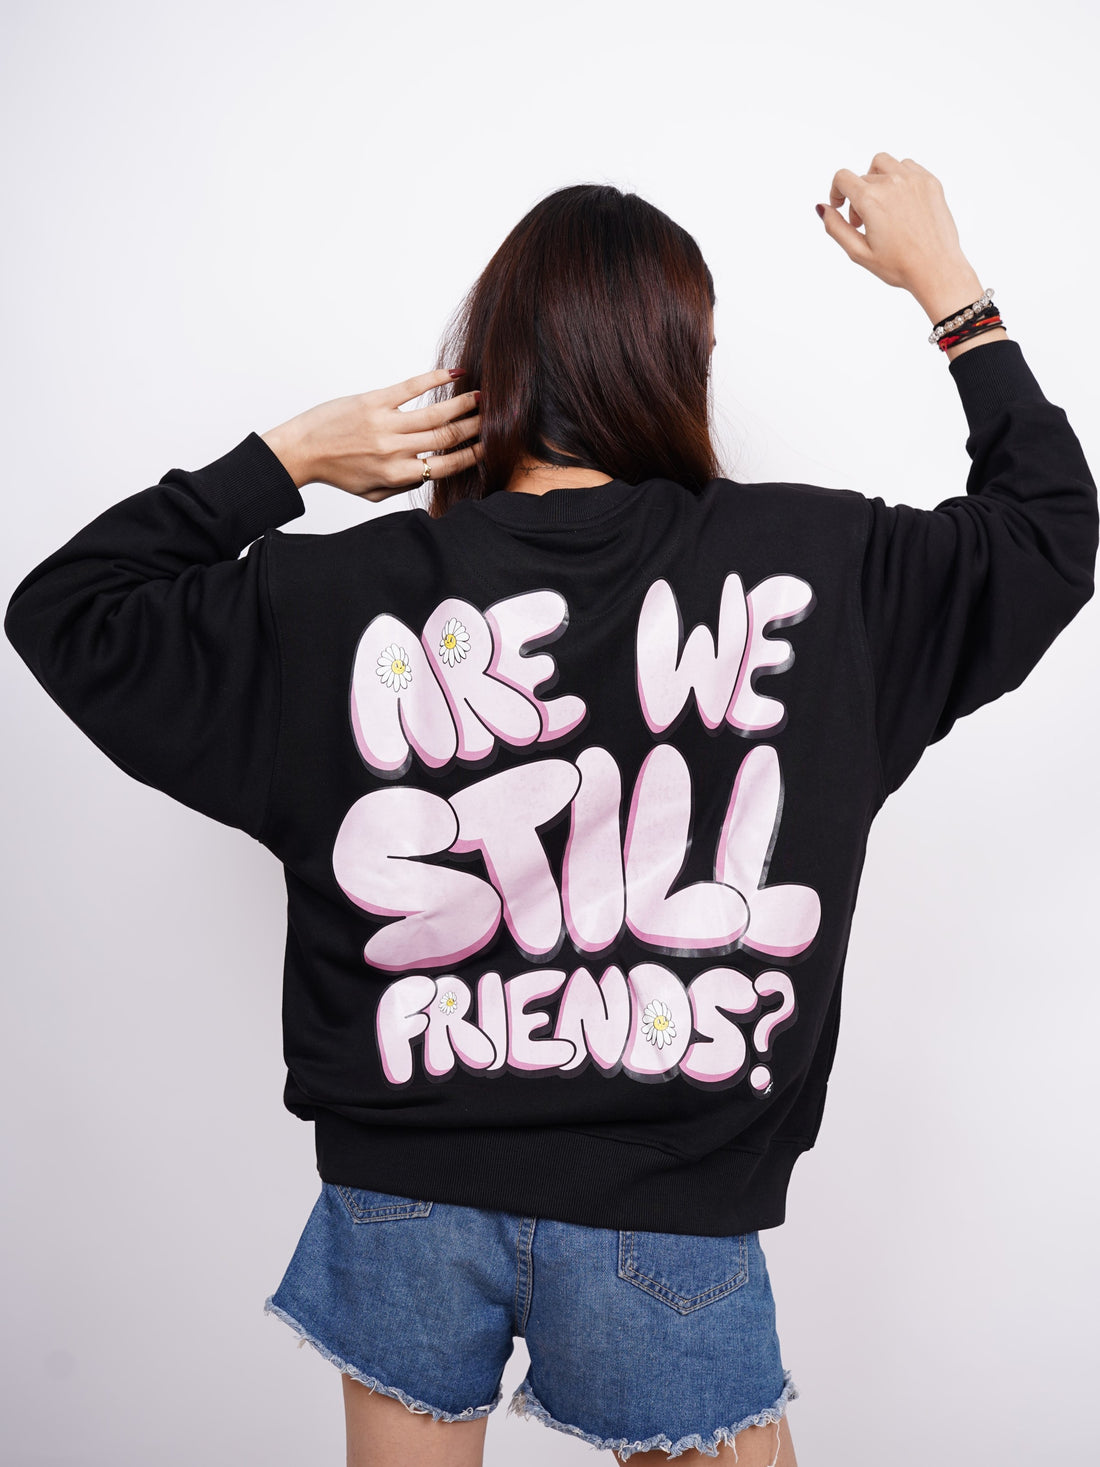 Are We Still Friends ? - Tyler the Creator Heavyweight Baggy Sweatshirt For Men And Women